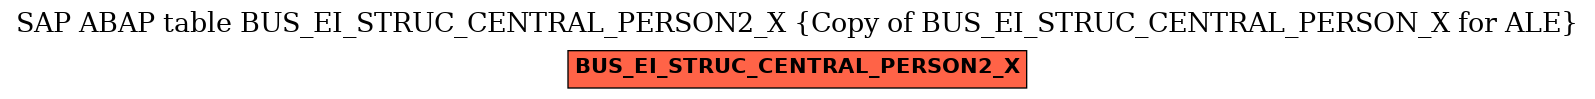 E-R Diagram for table BUS_EI_STRUC_CENTRAL_PERSON2_X (Copy of BUS_EI_STRUC_CENTRAL_PERSON_X for ALE)